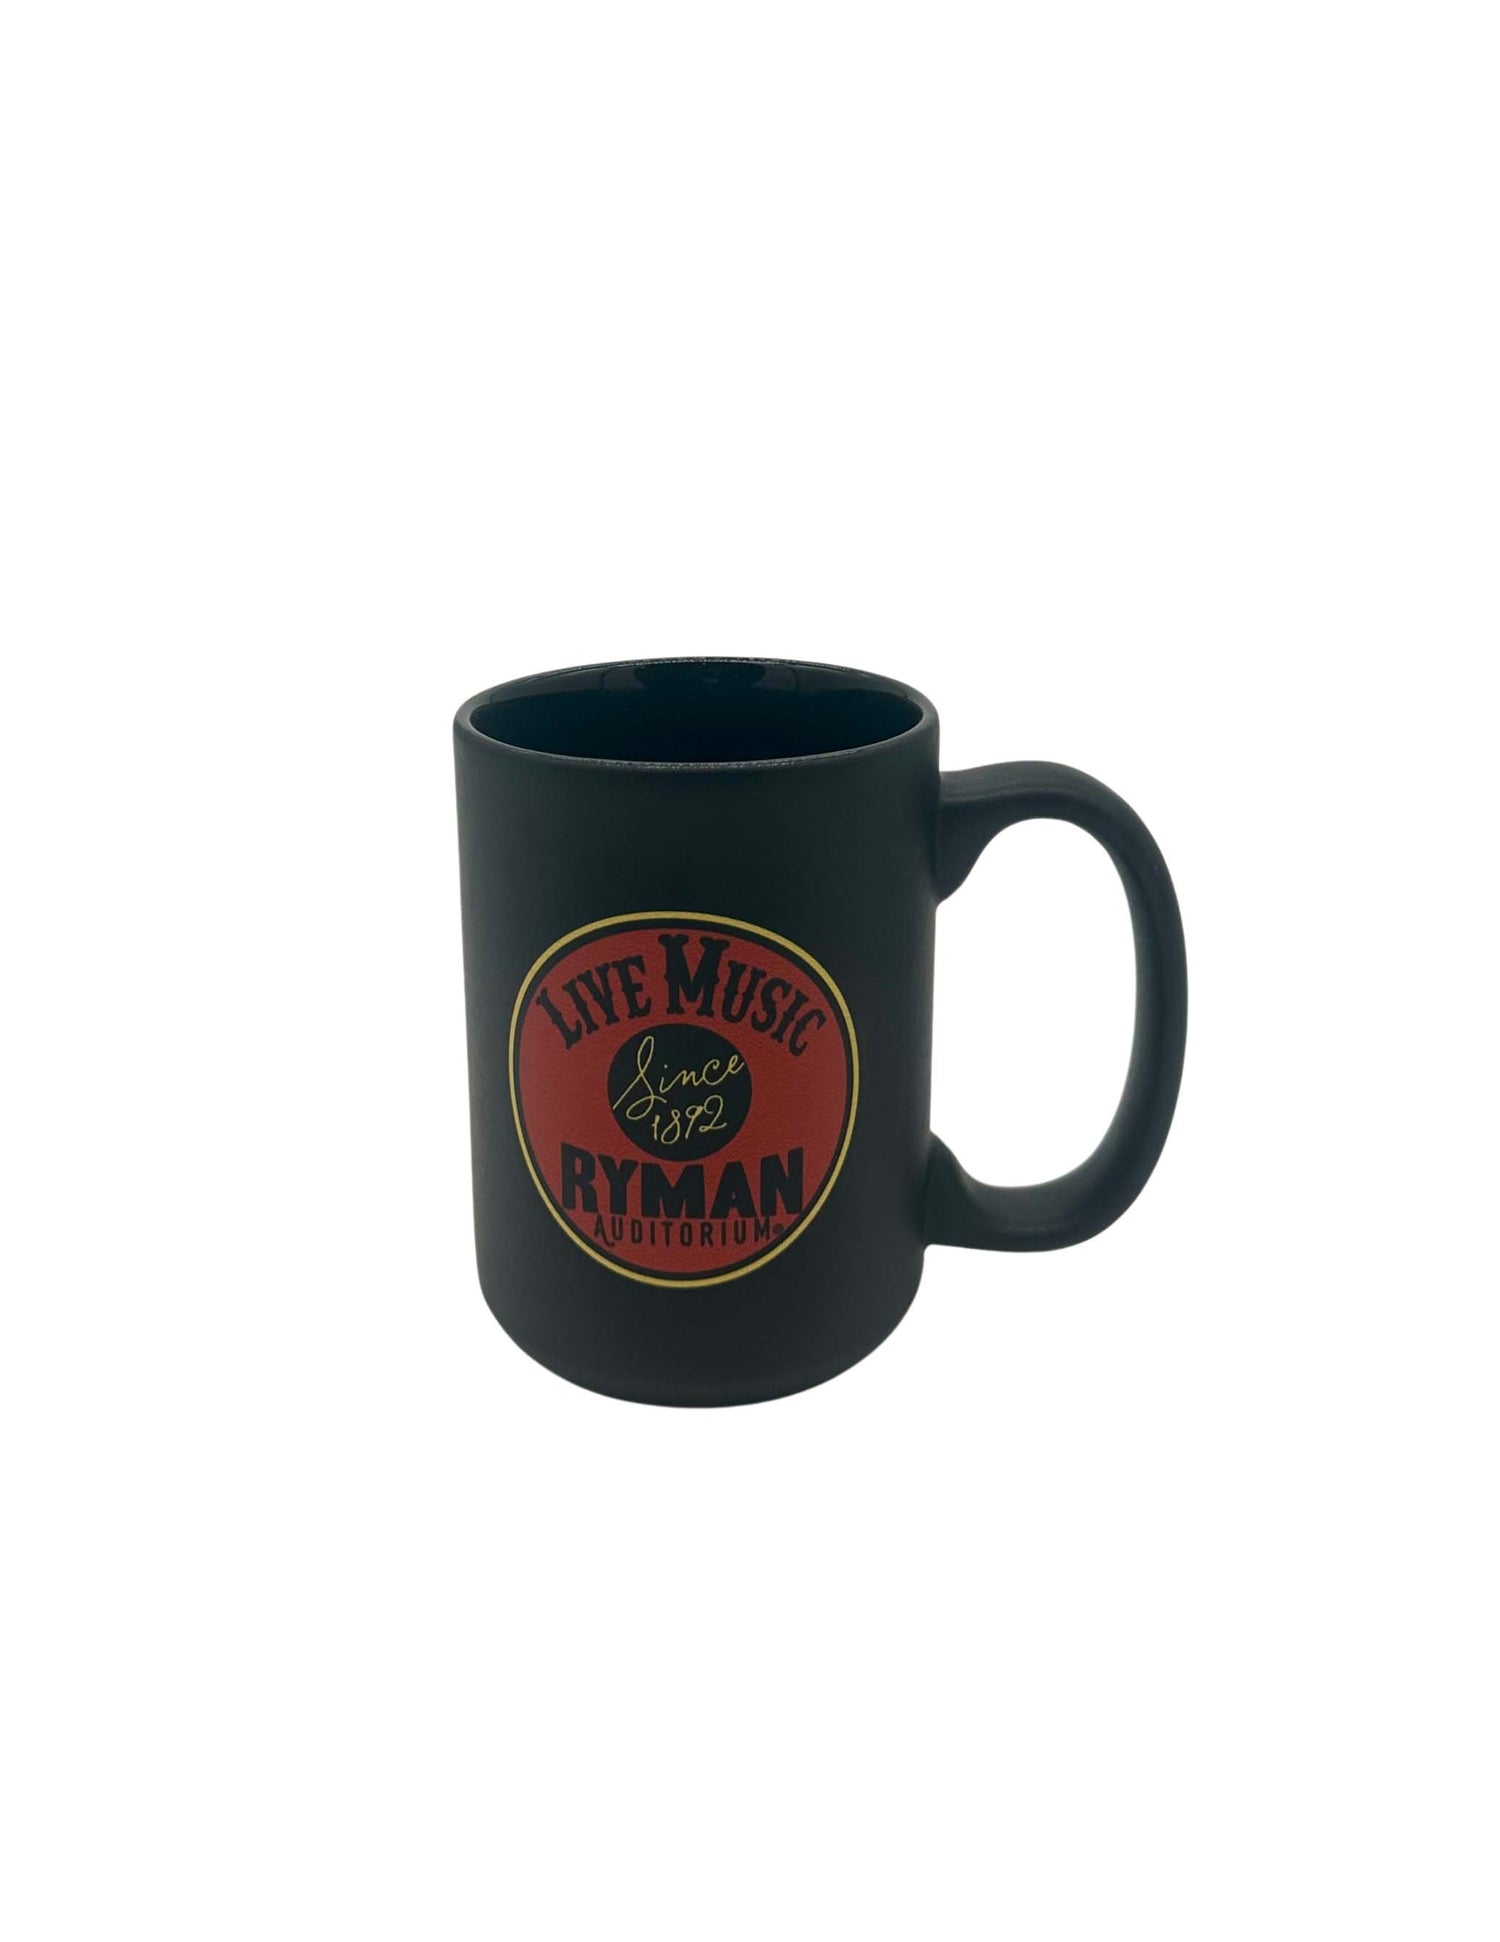 Ryman On The Record Coffee Mug